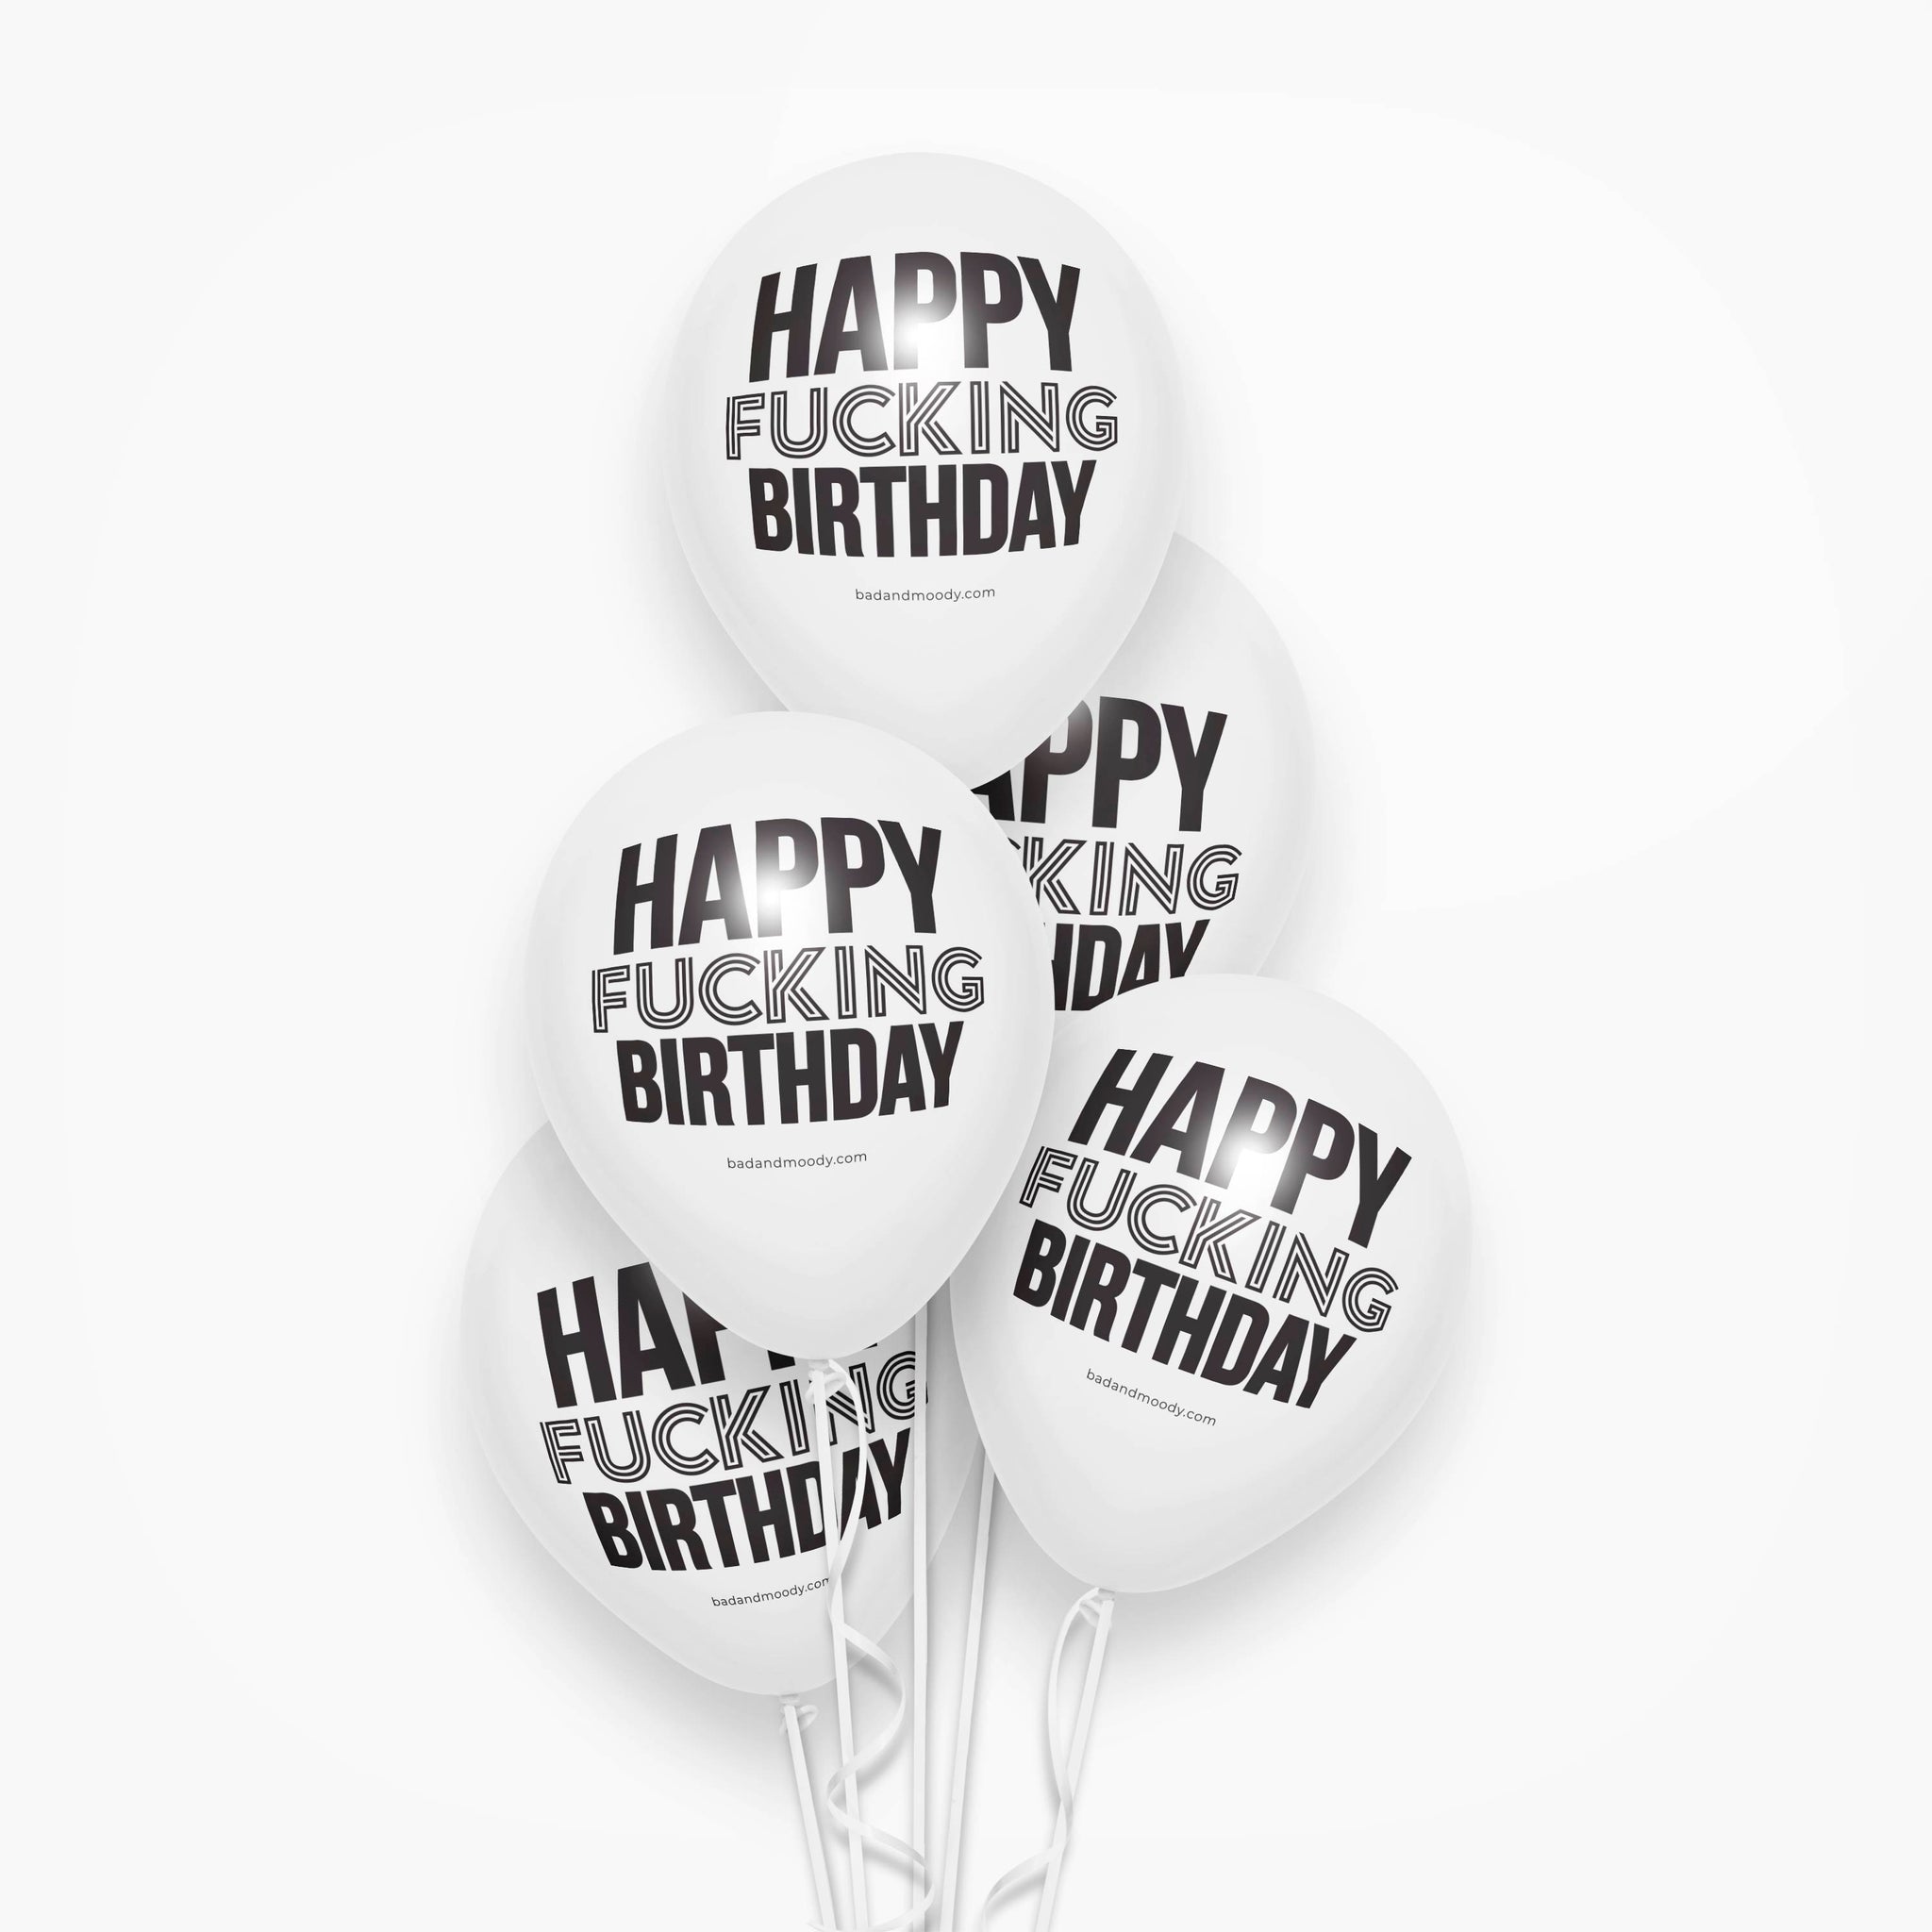 Happy Fucking Birthday Balloons Biodegradable Party Balloons